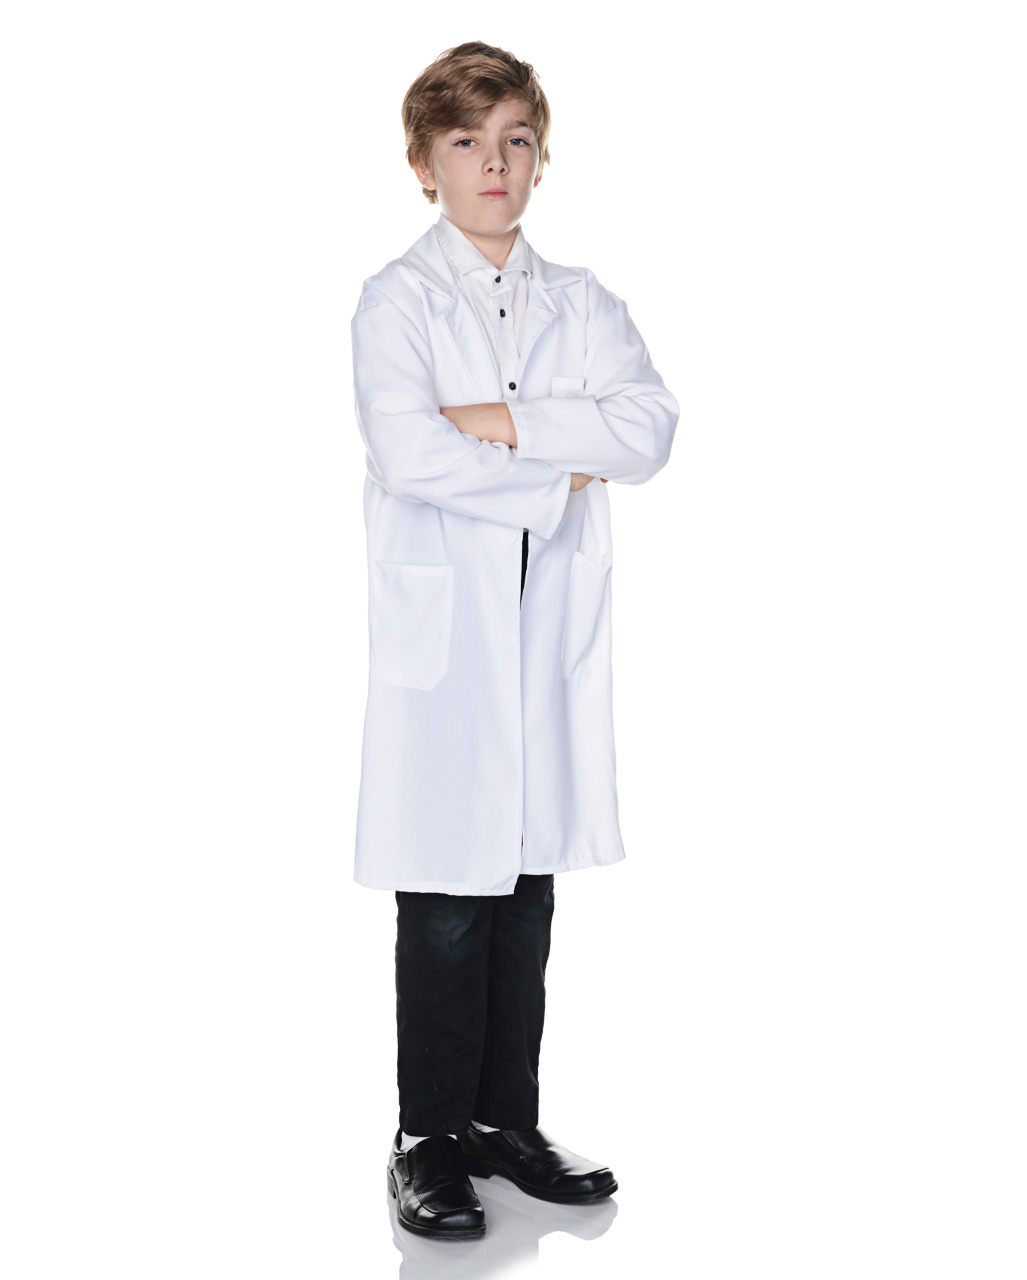 CHILDS DOCTOR LAB COAT SCIENTIST MEDICAL HOSPITAL EXPERIMENT FANCY DRESS COSTUME